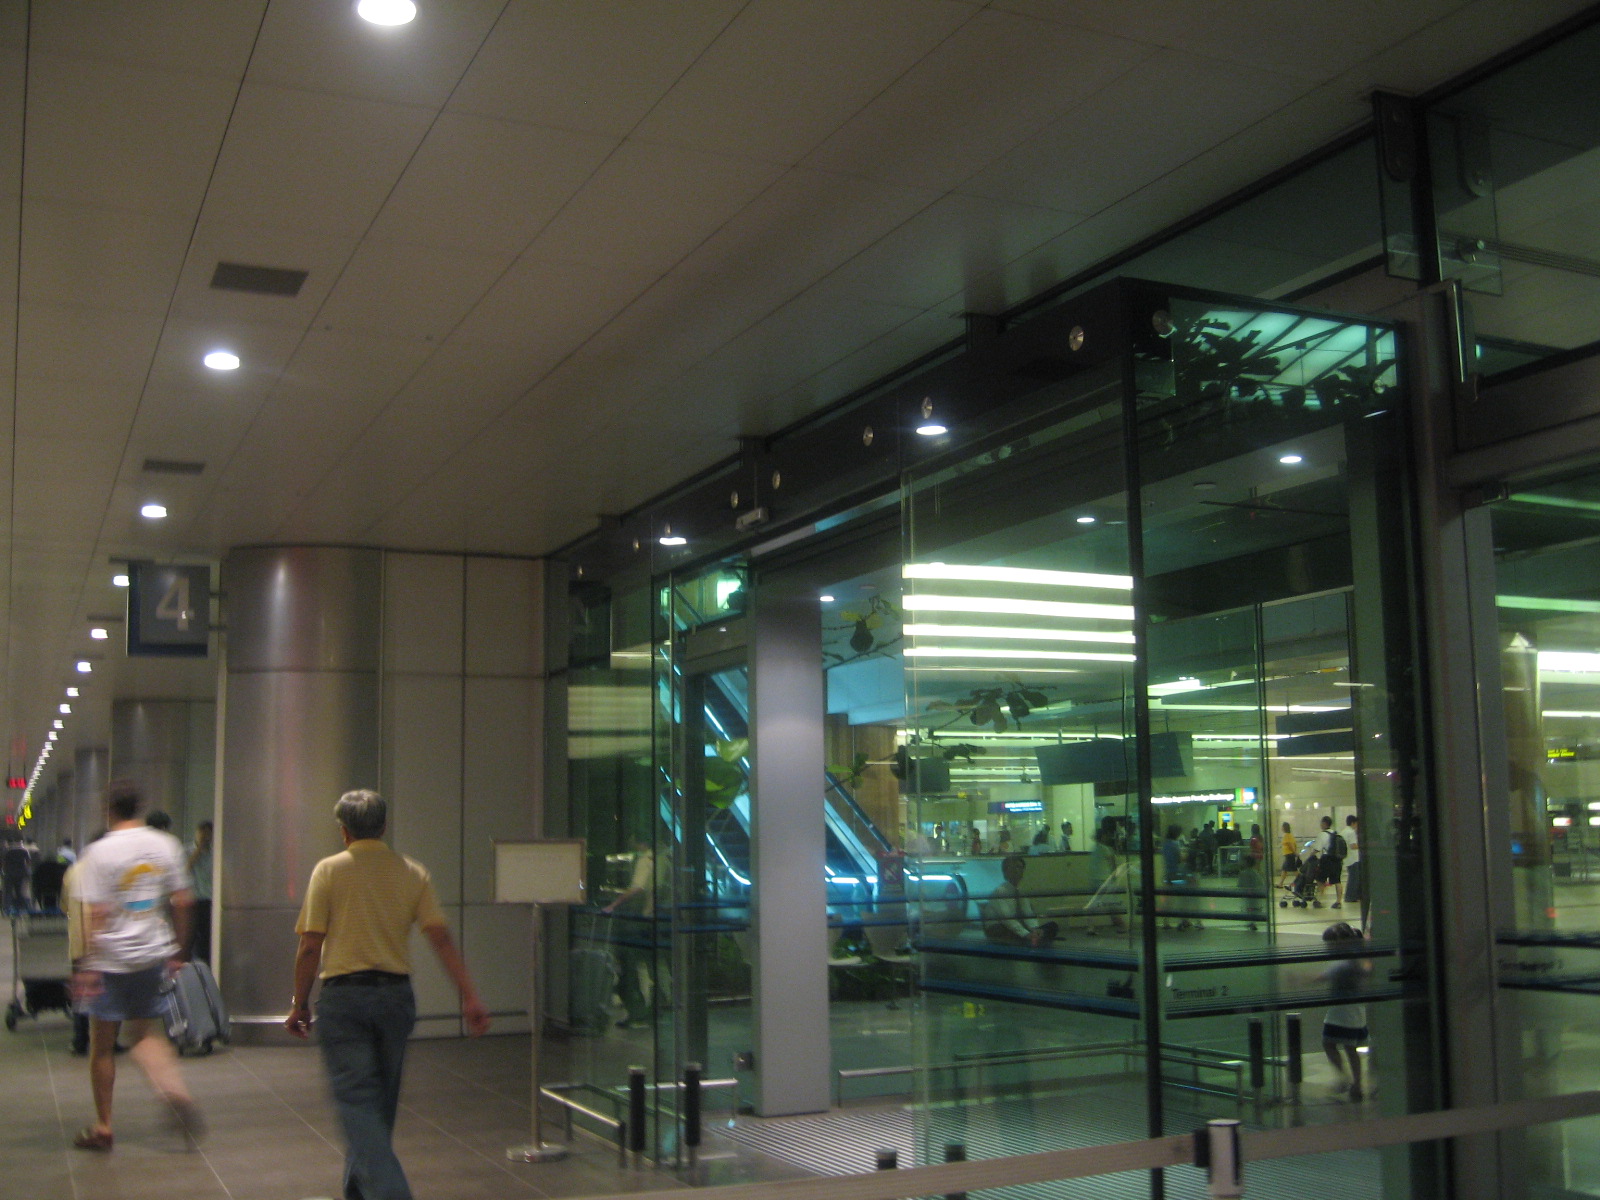 File:Changi Airport, Terminal 2, Arrival Hall 2.JPG - Wikimedia